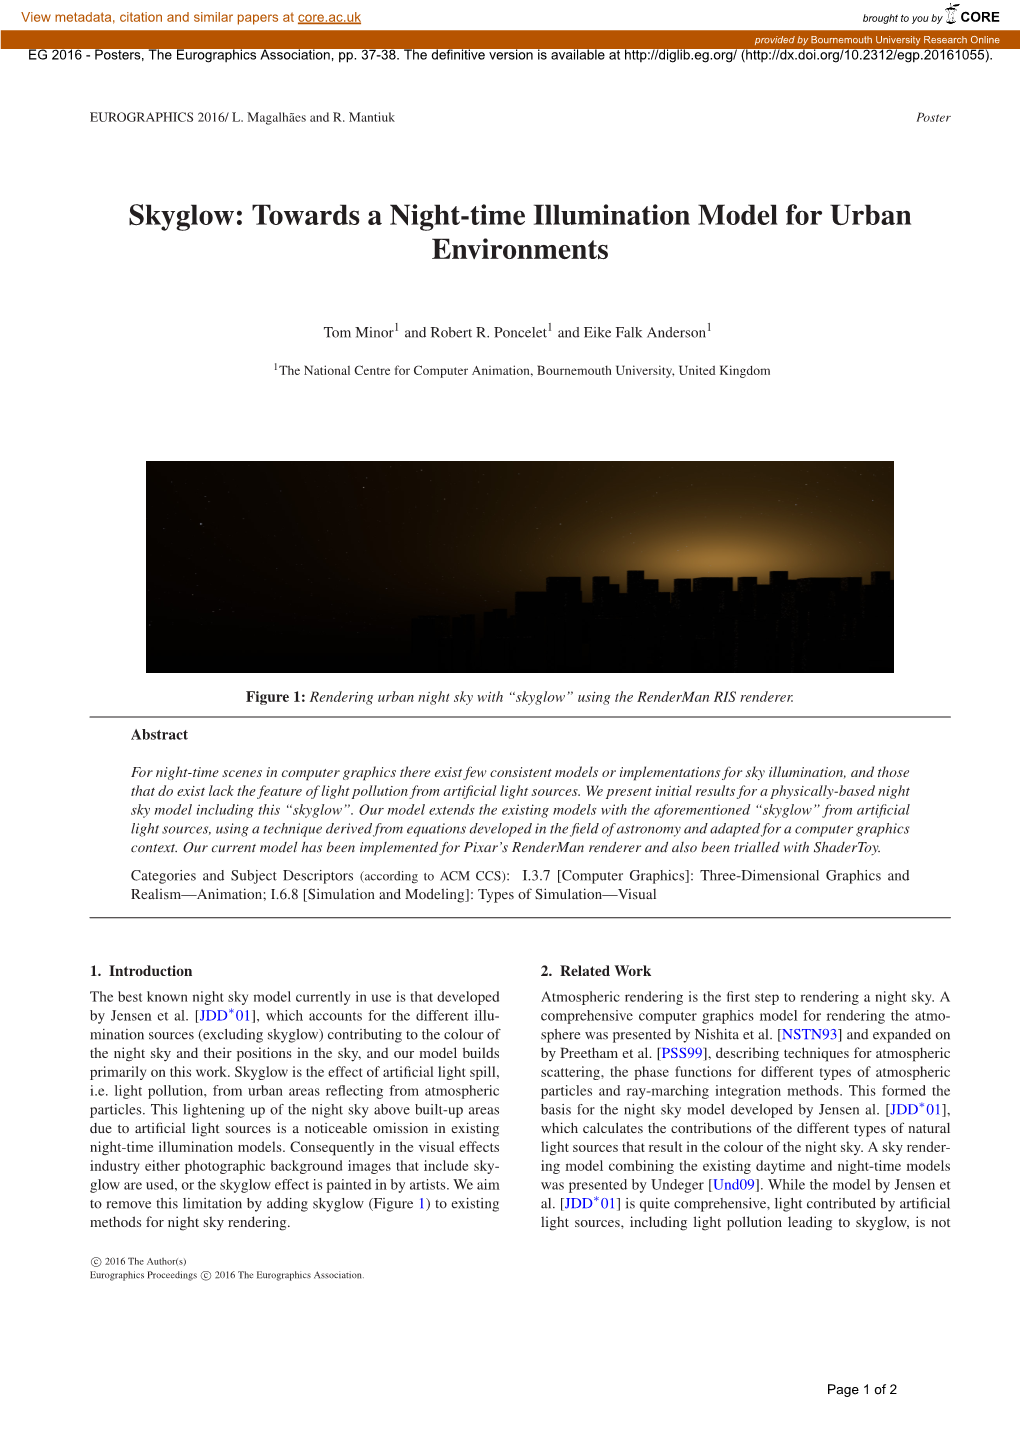 Skyglow: Towards a Night-Time Illumination Model for Urban Environments